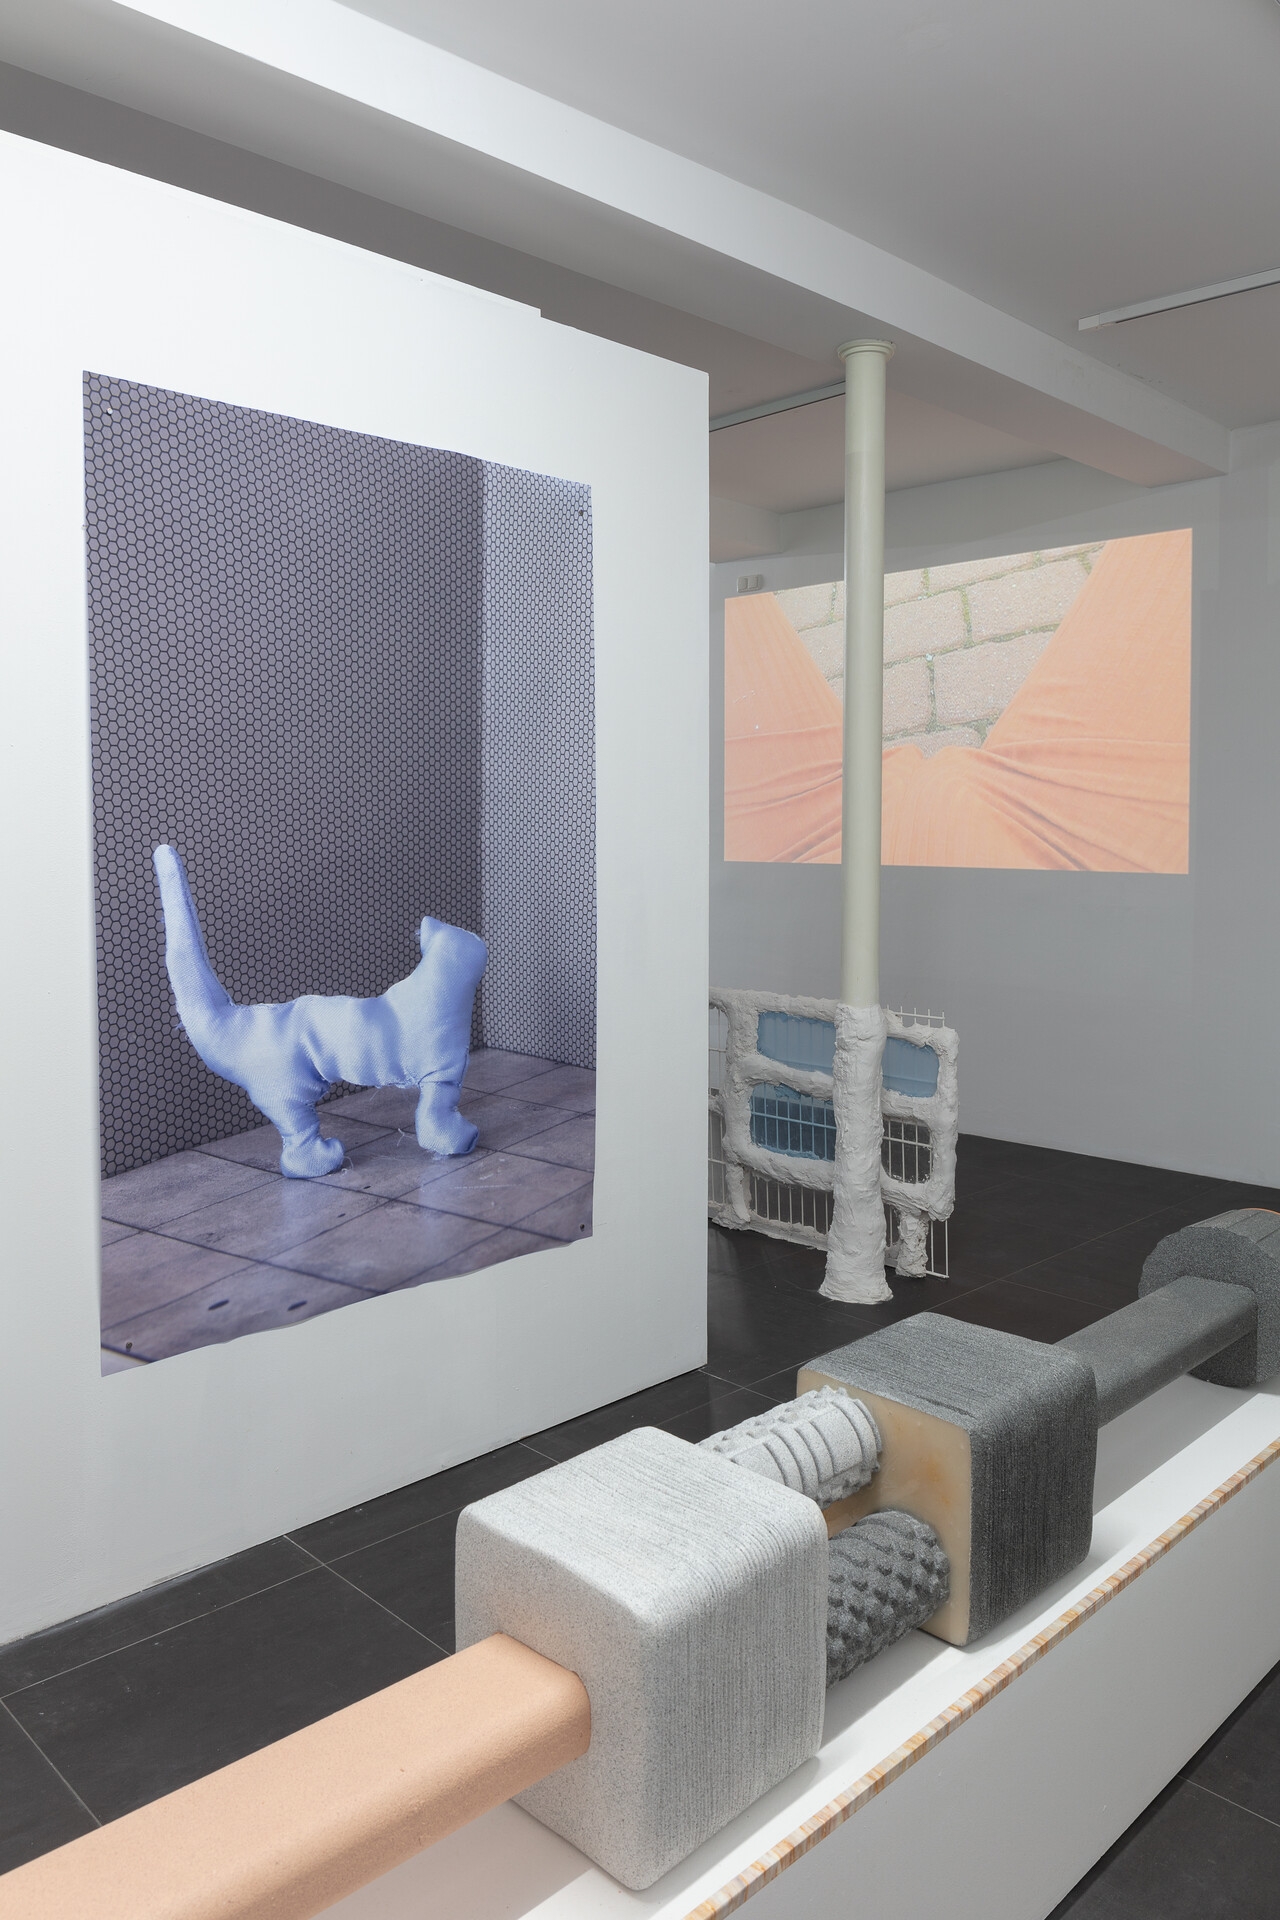 Geranie (Katzenbaum), 293×30×30cm, 2019, Epoxy resin, Effect paint, Plaster, Plastics, Polystyrene, PU-foam / Lotta, 118,5×174,5 cm, 2019, Digital print